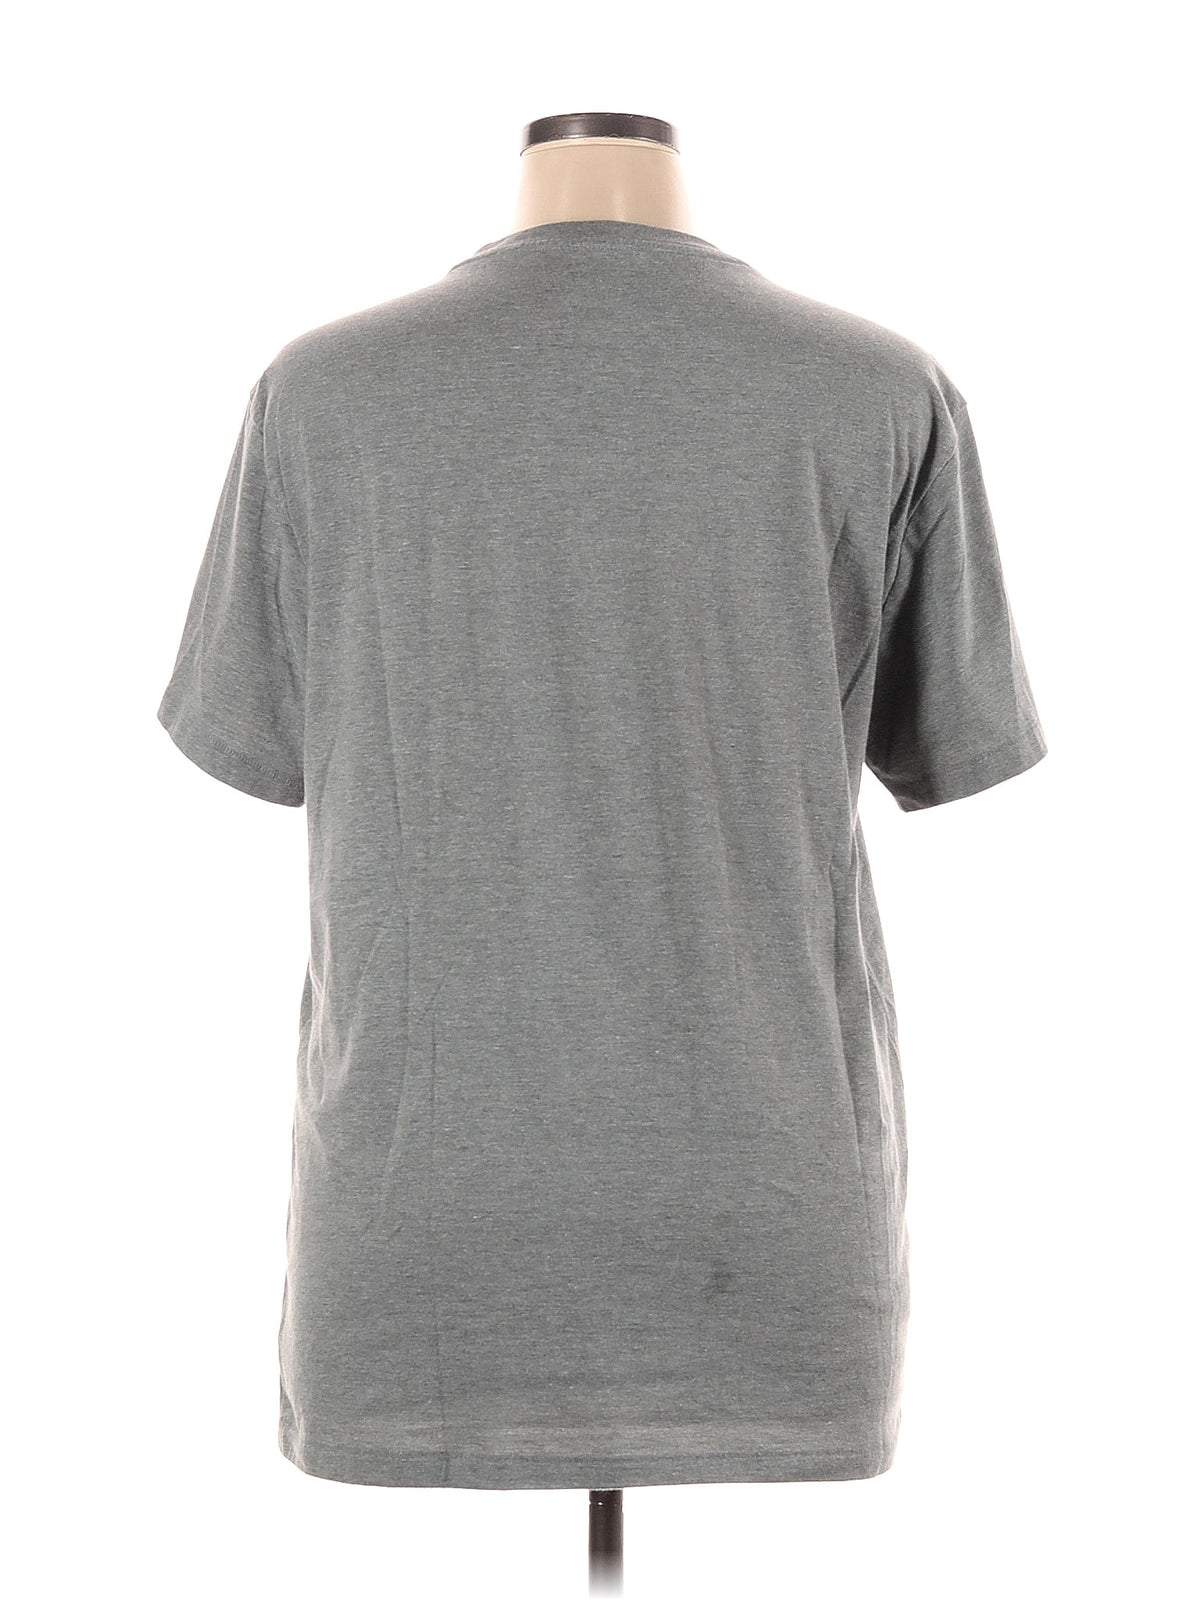 Short Sleeve T Shirt size - XL